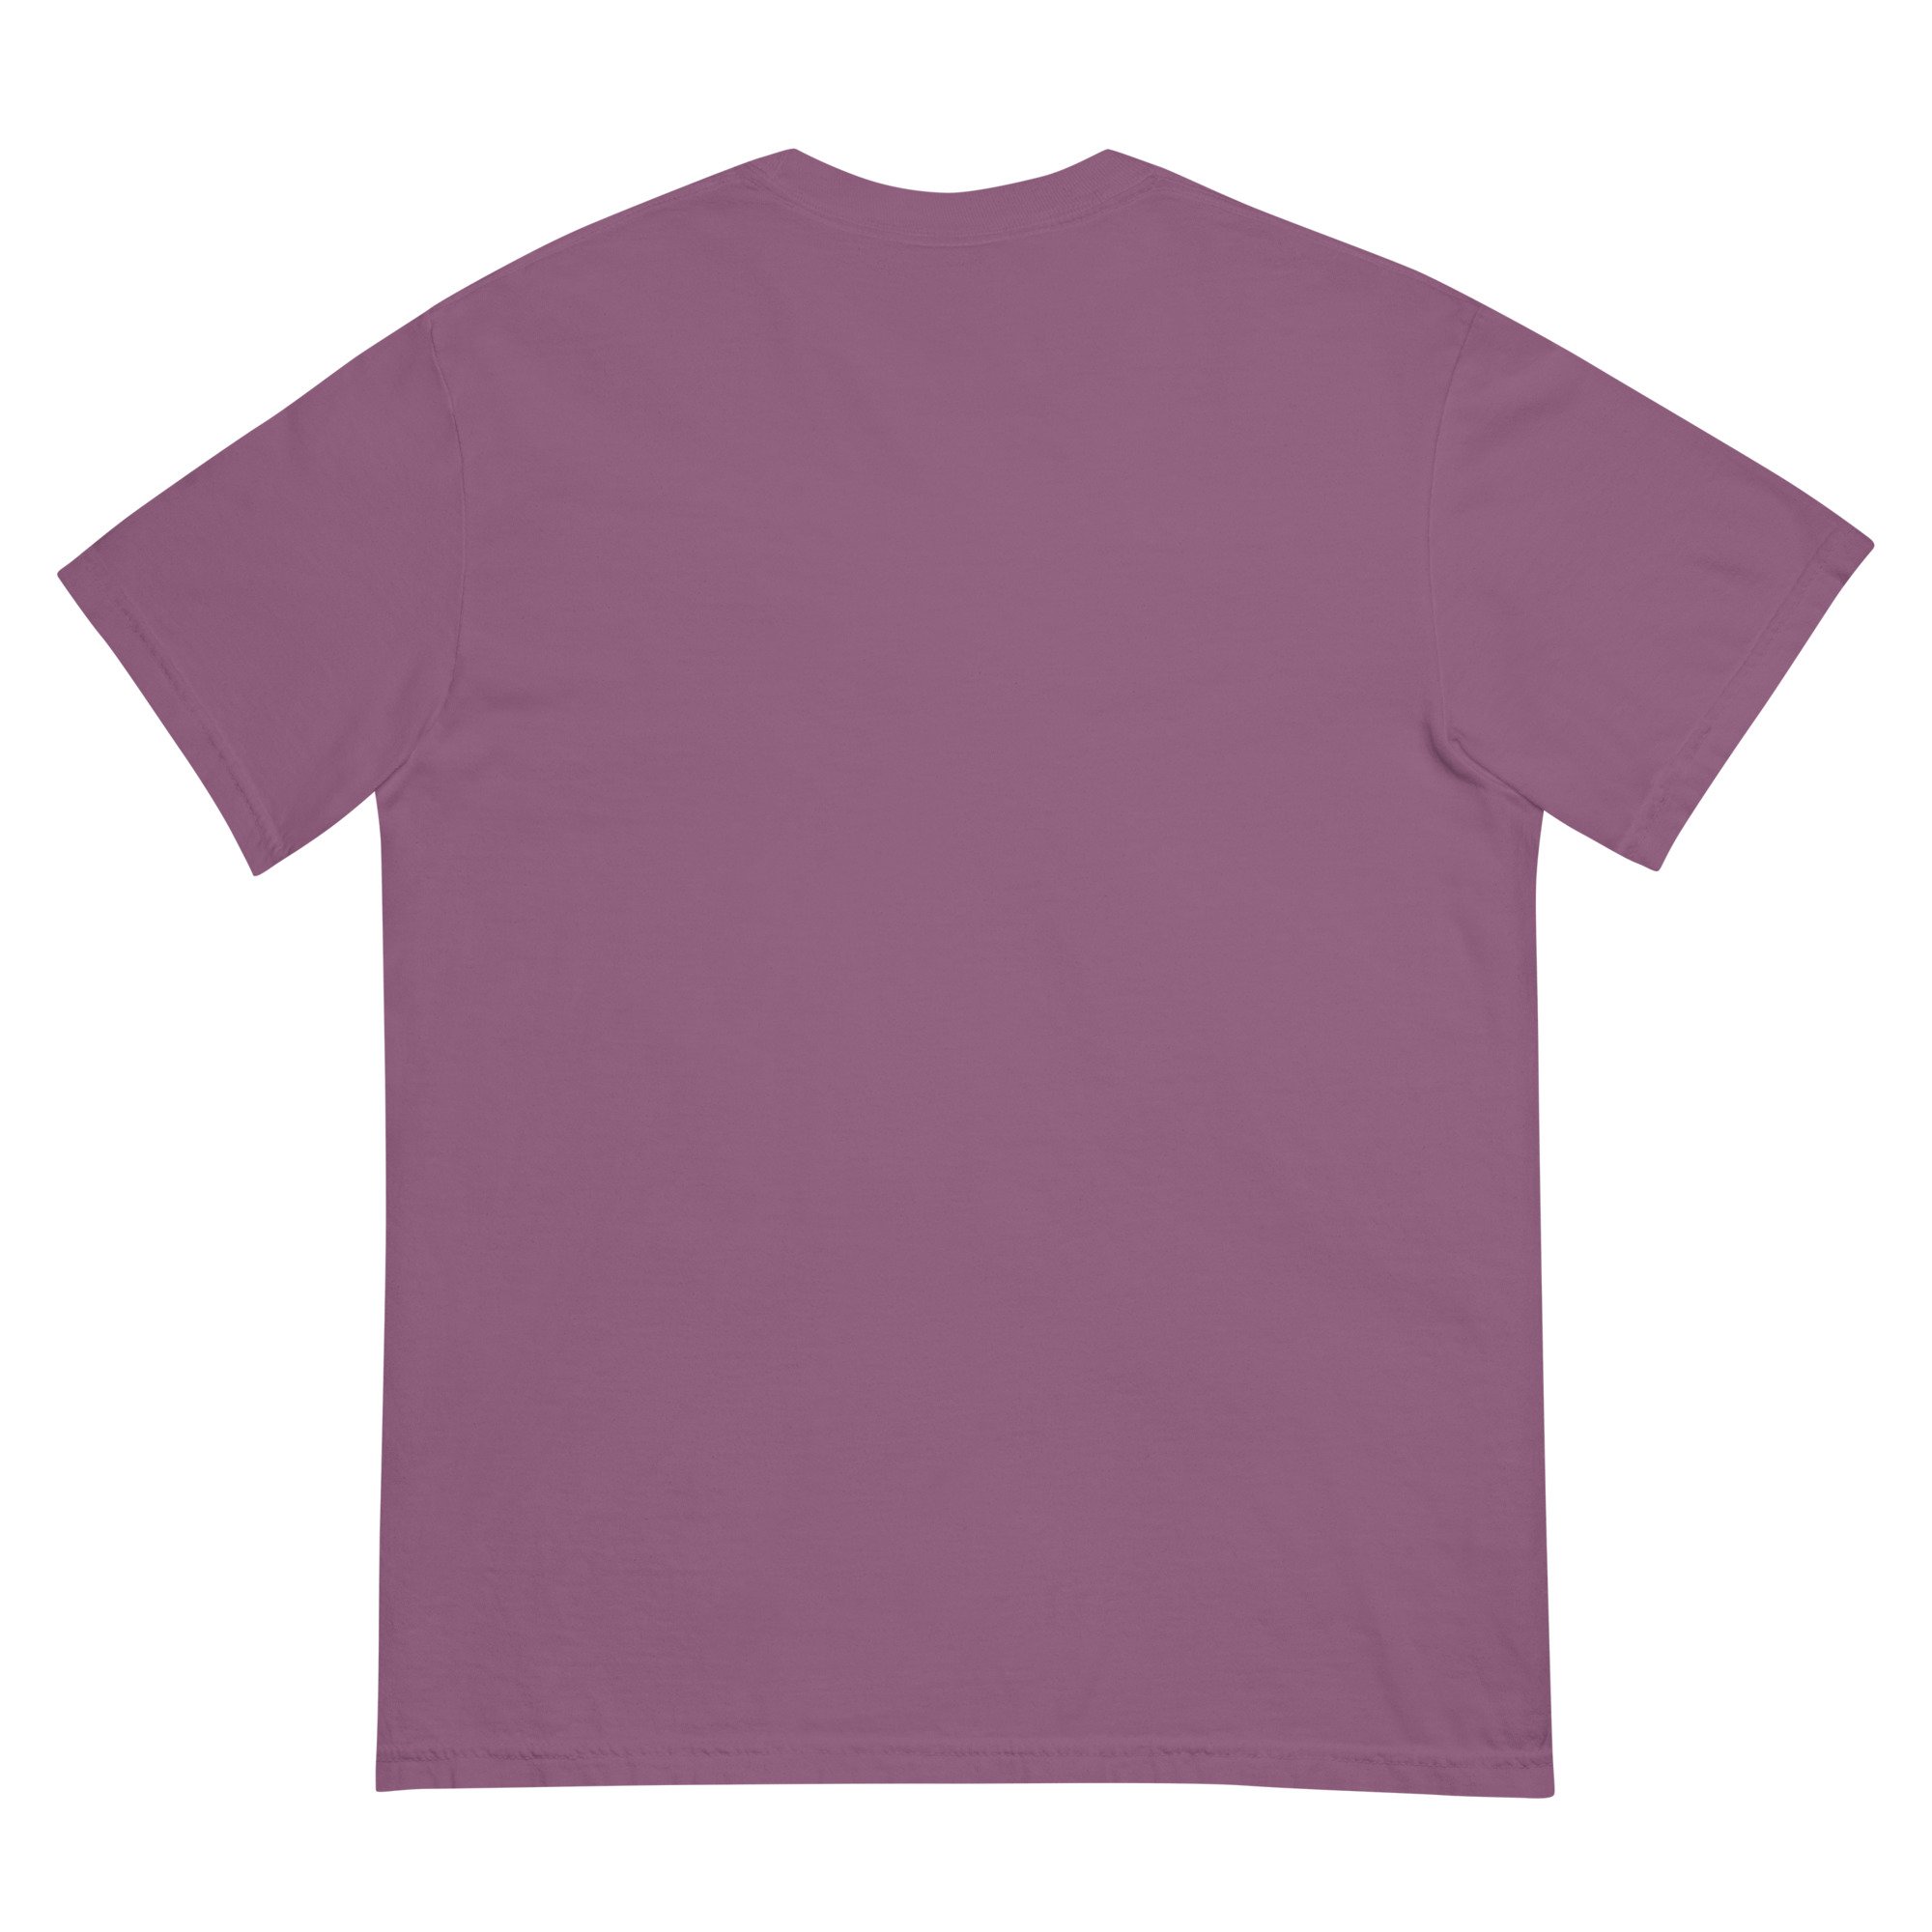 Men's garment-dyed heavyweight t-shirt – FISHMO